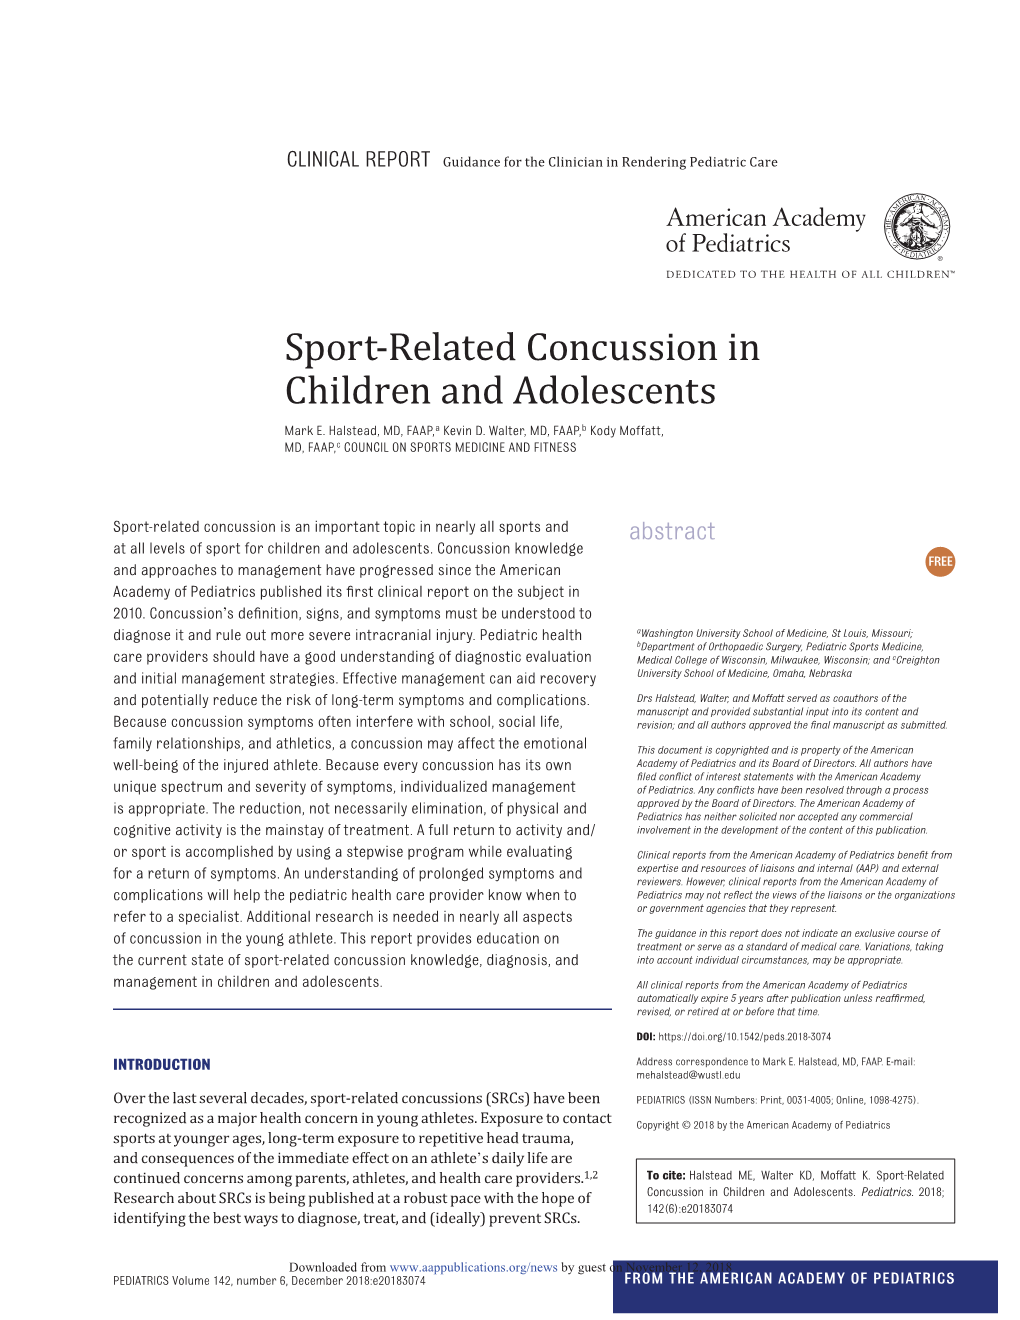 Sport-Related Concussion in Children and Adolescents Mark E